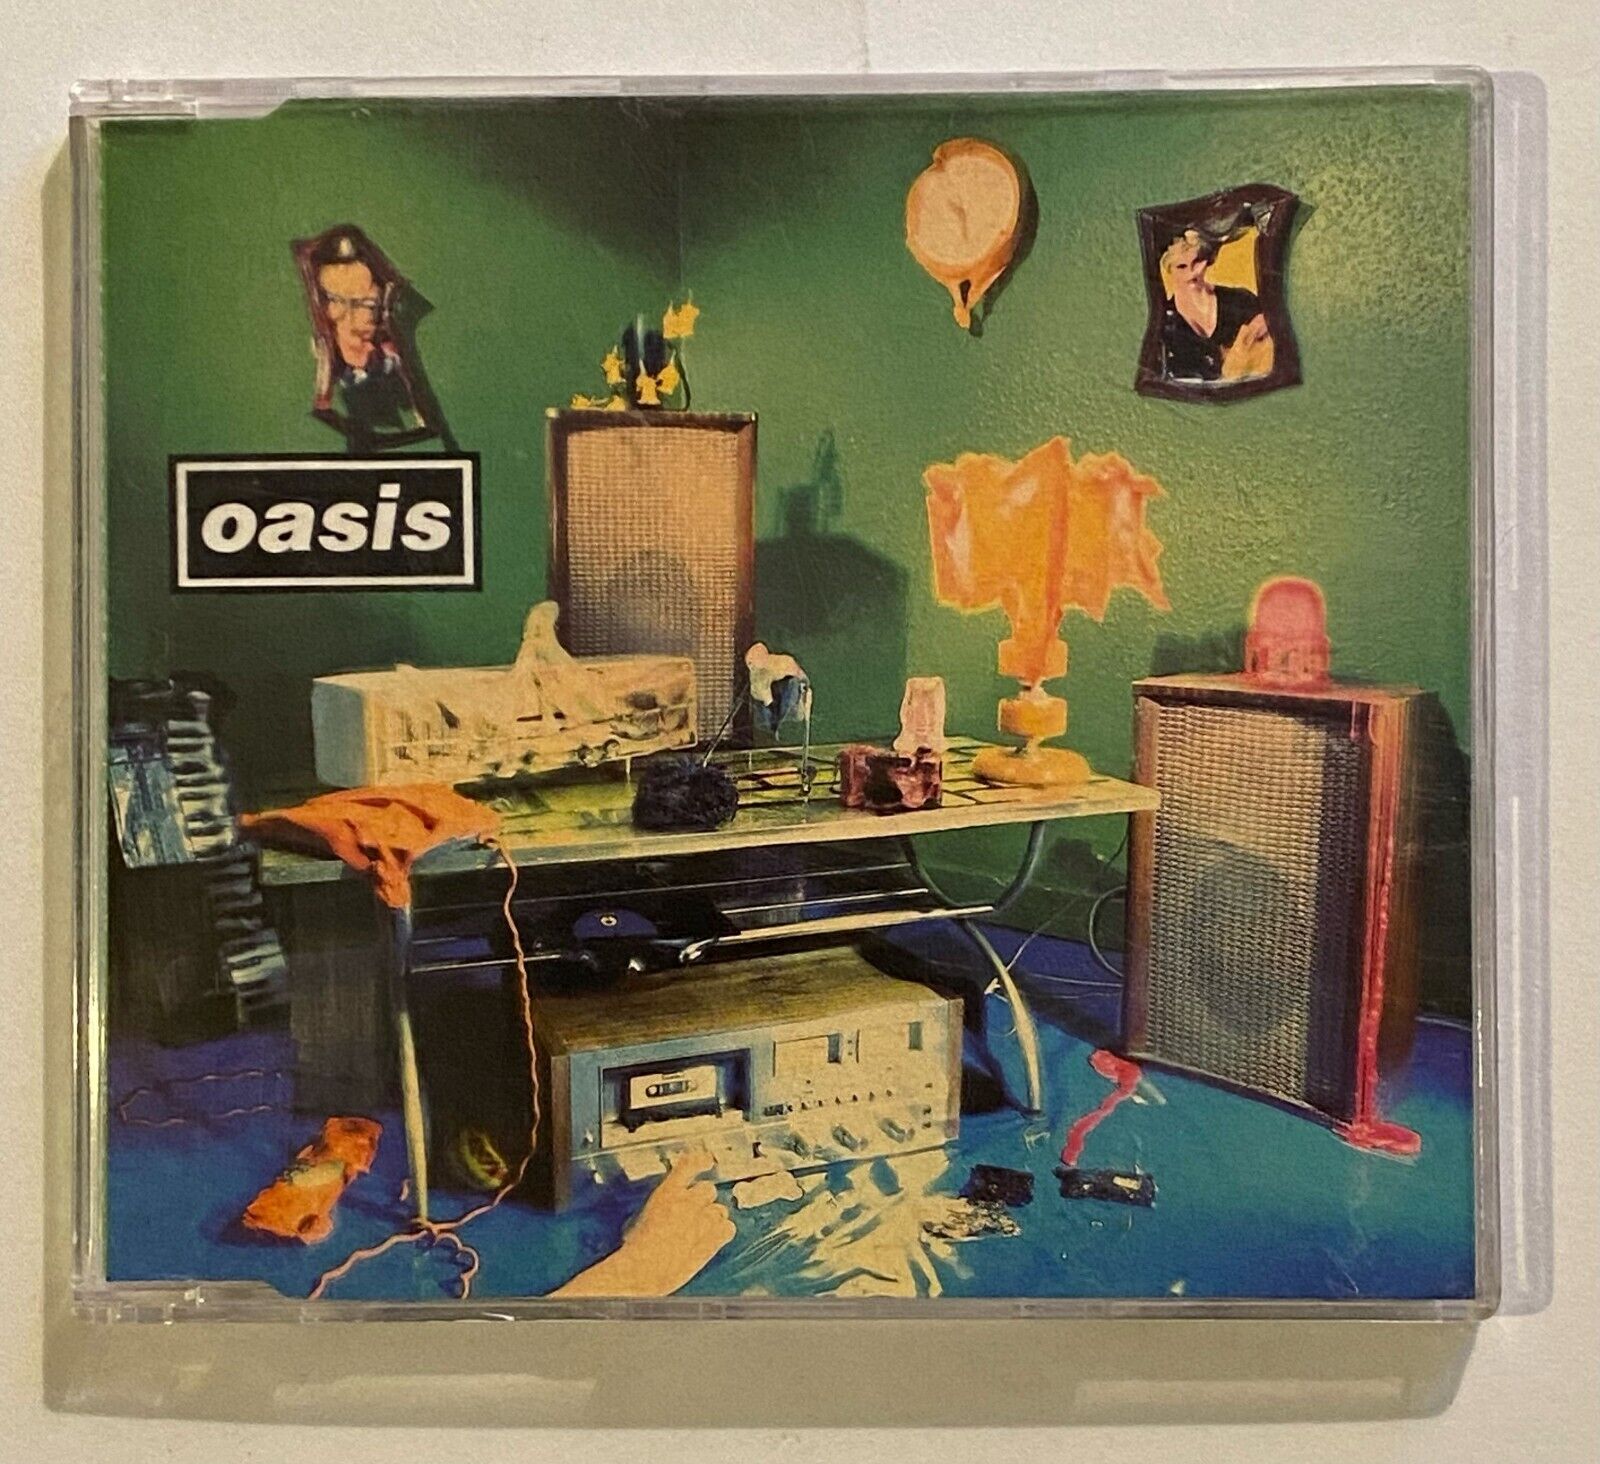 Oasis Shakermaker 1994 UK Import CD Single